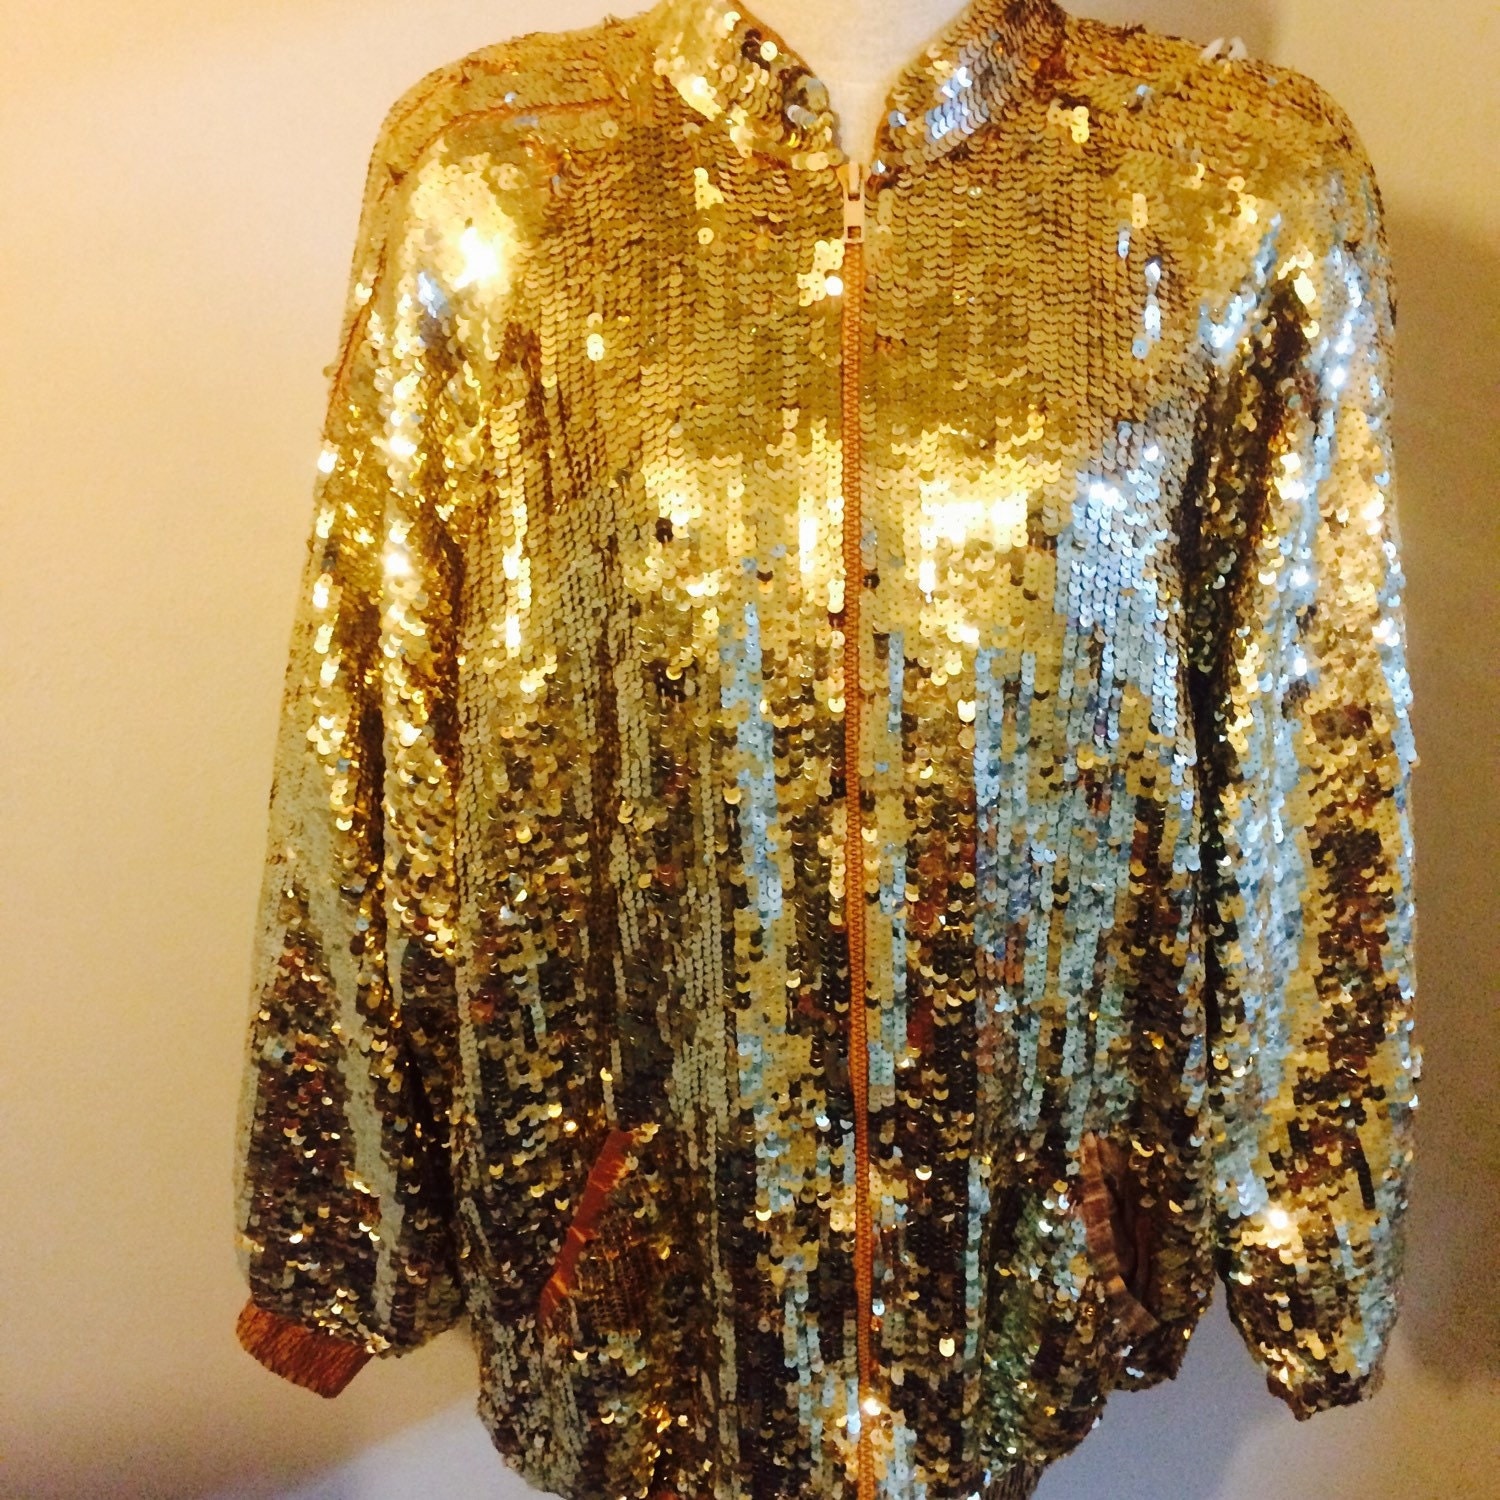 Vintage gold sequin bomber jacket by LadyJaneBristol on Etsy